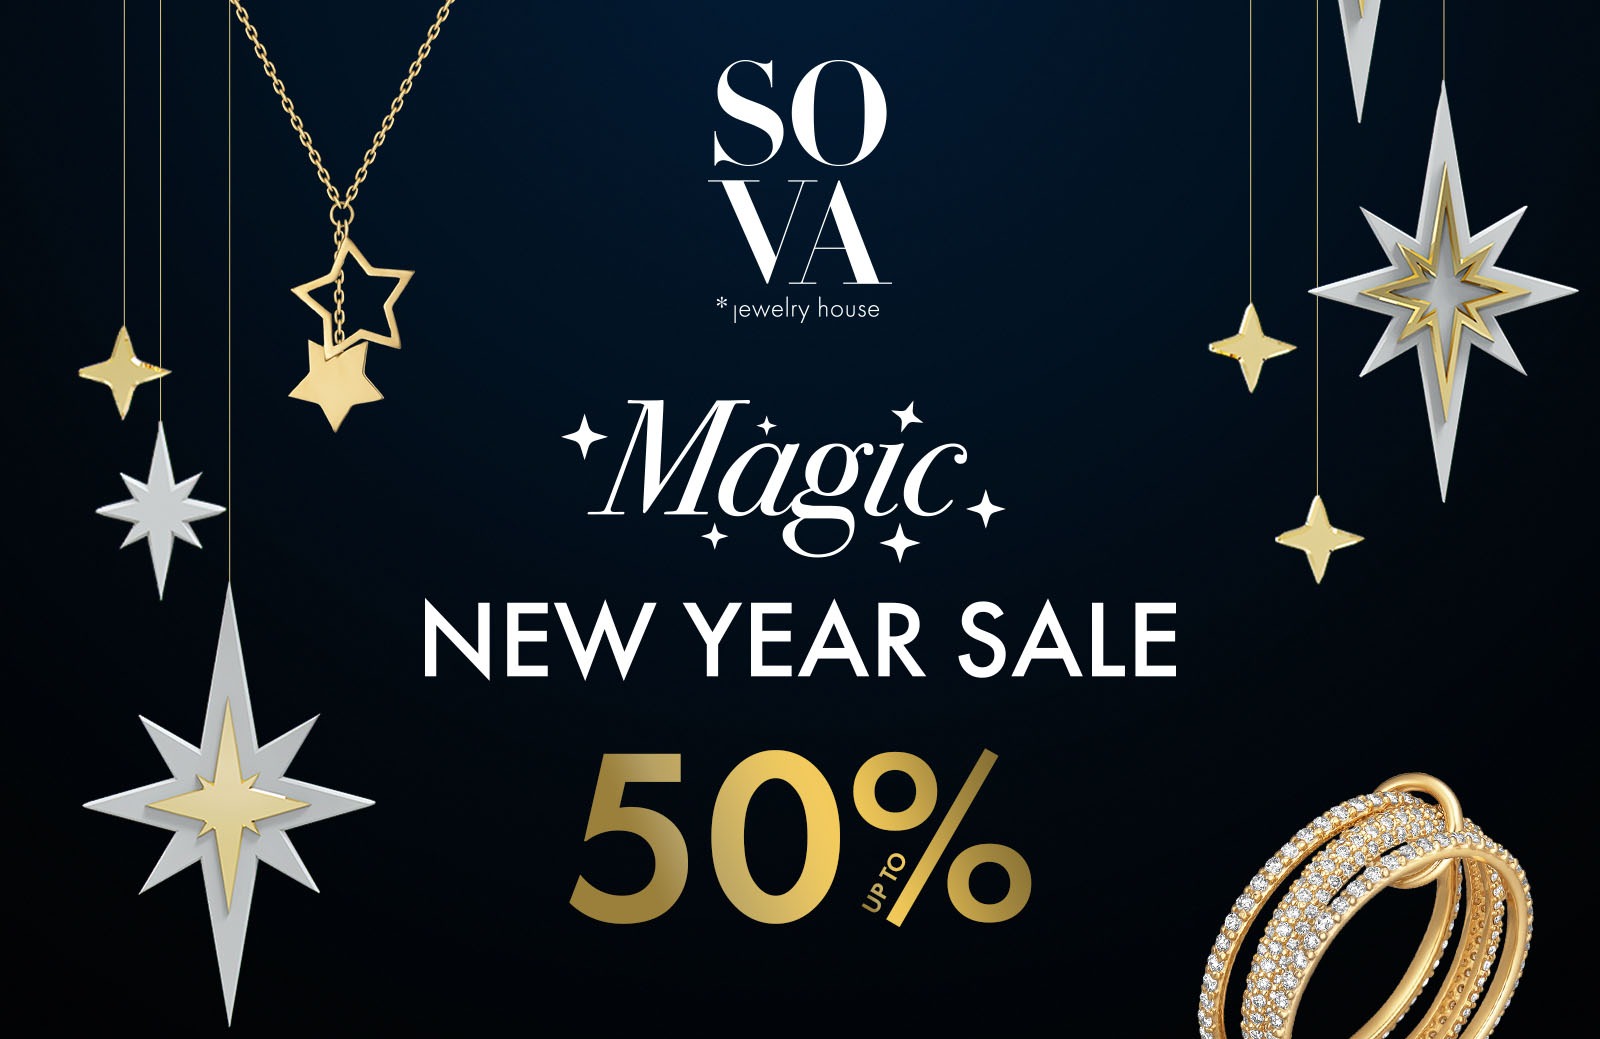 Magic new year sale Sova